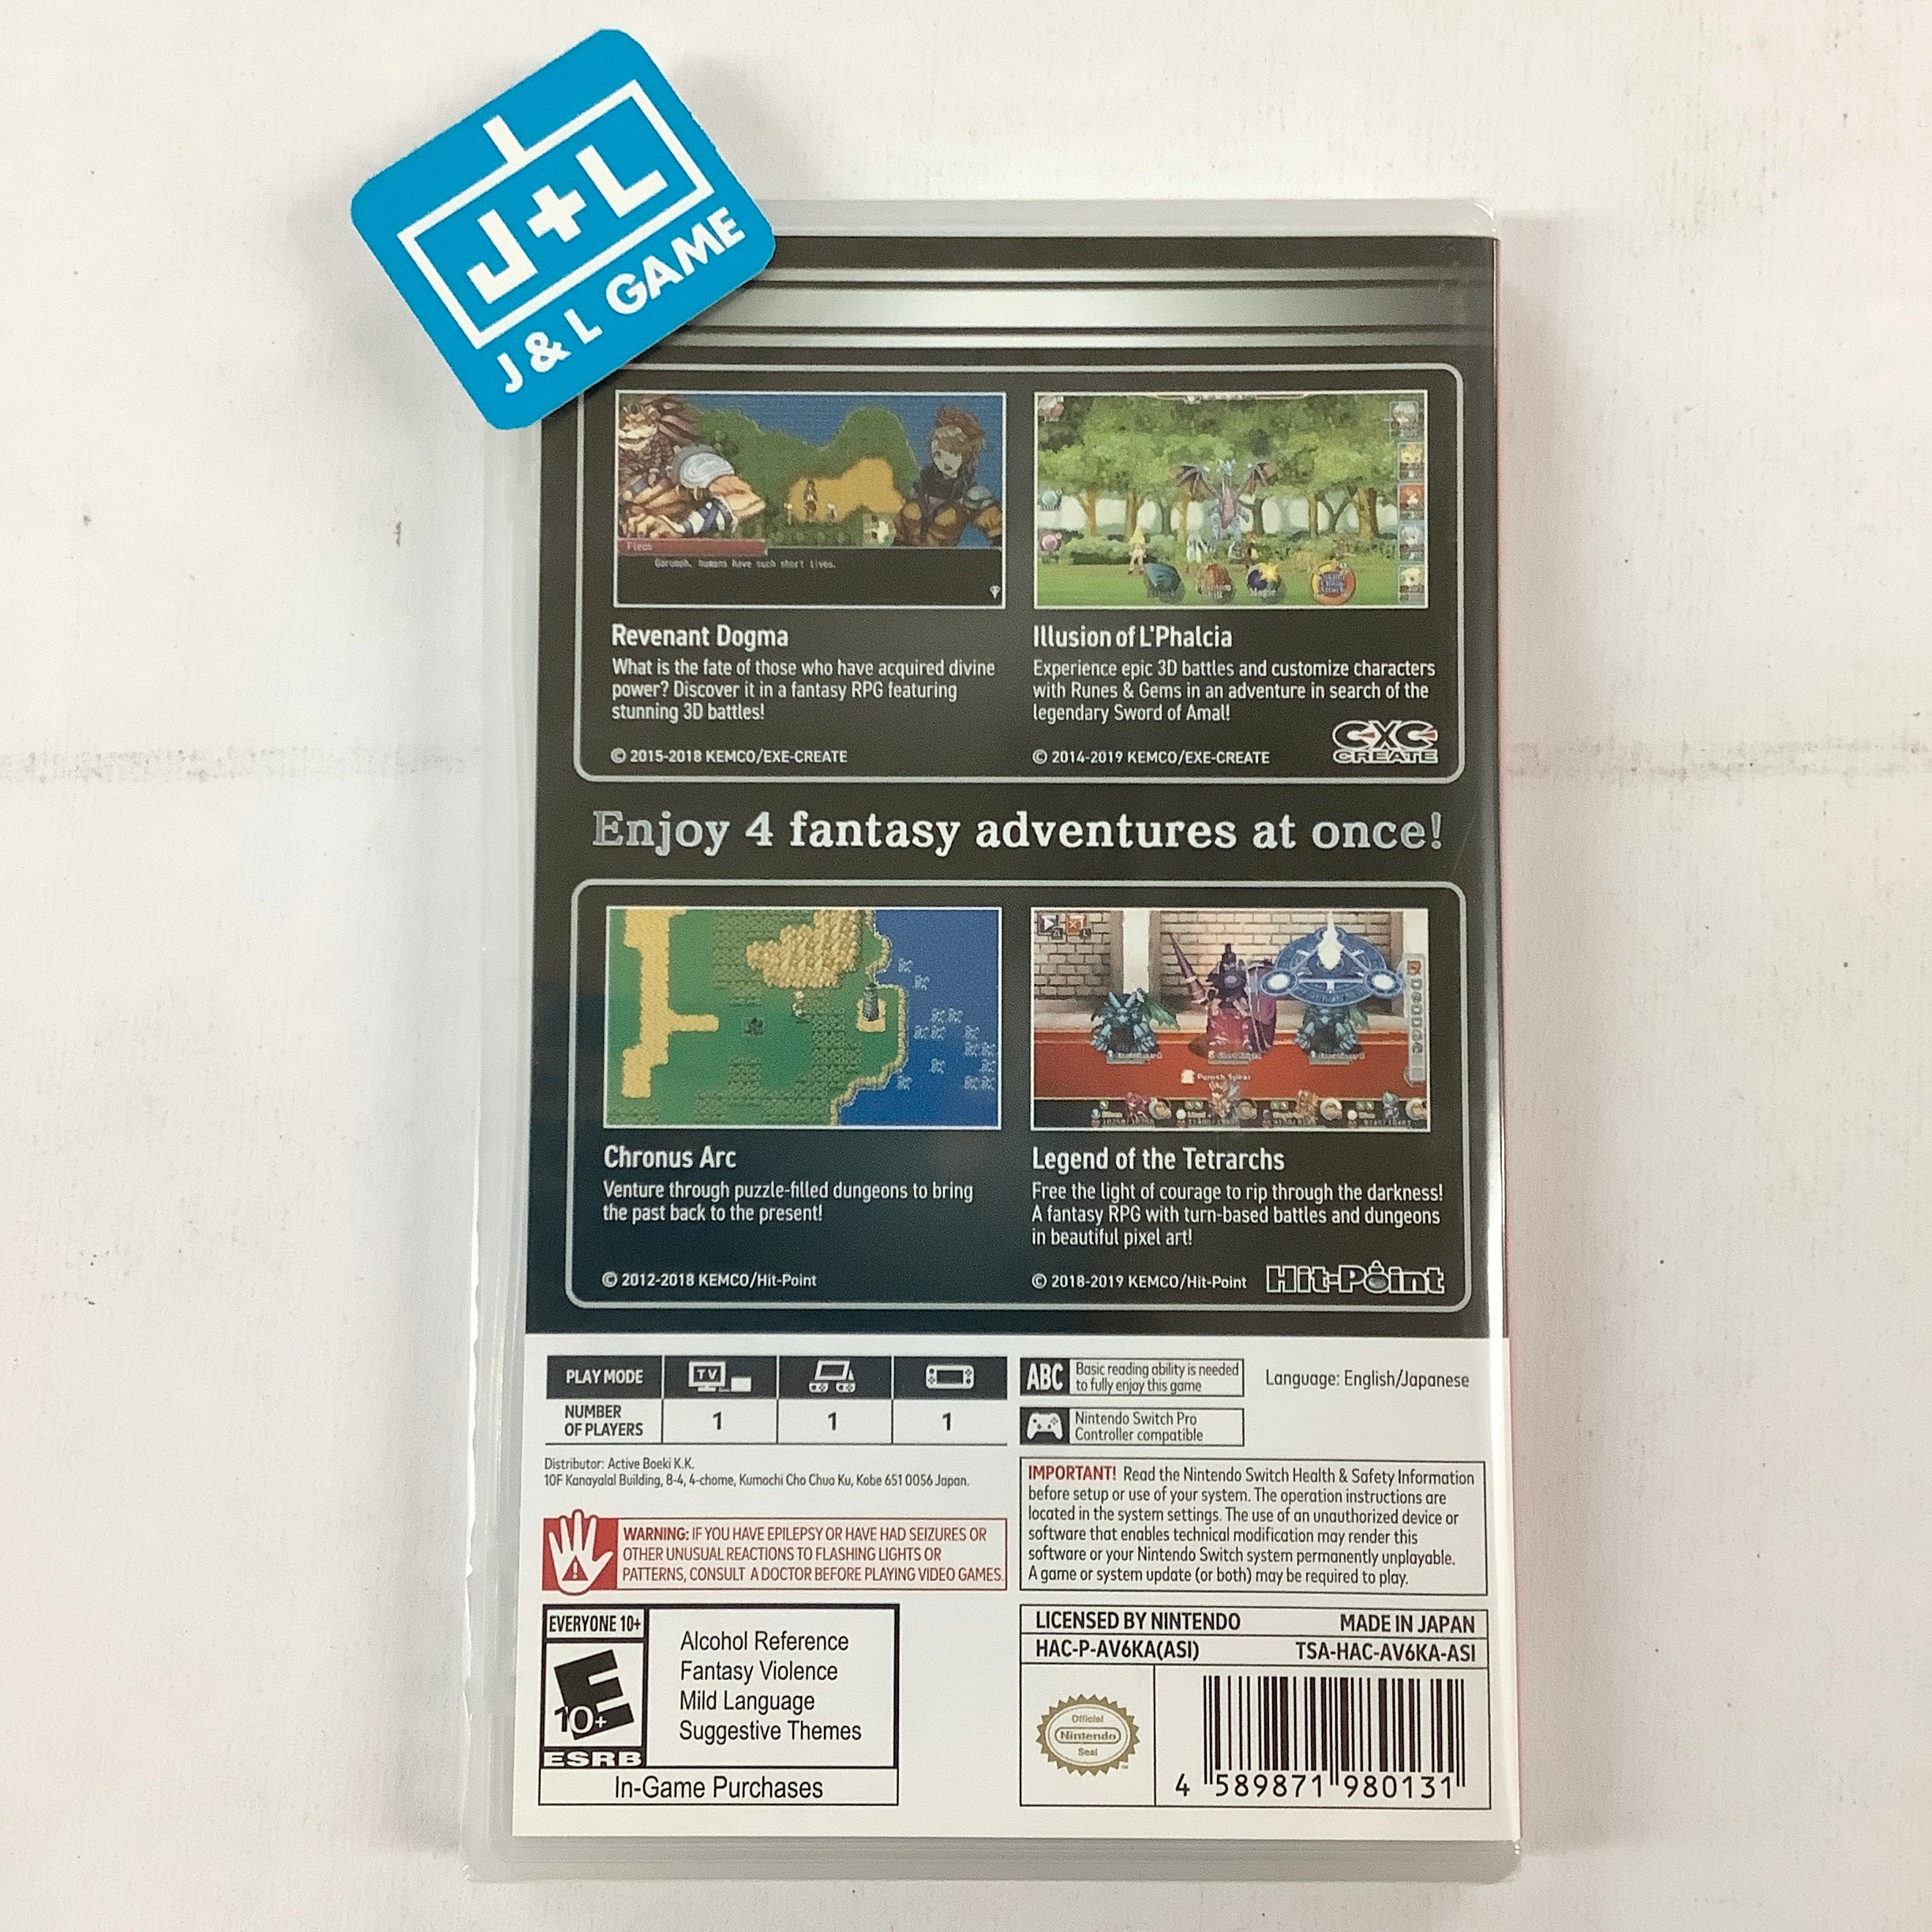 Kemco RPG Omnibus - (NSW) Nintendo Switch Video Games Kemco   